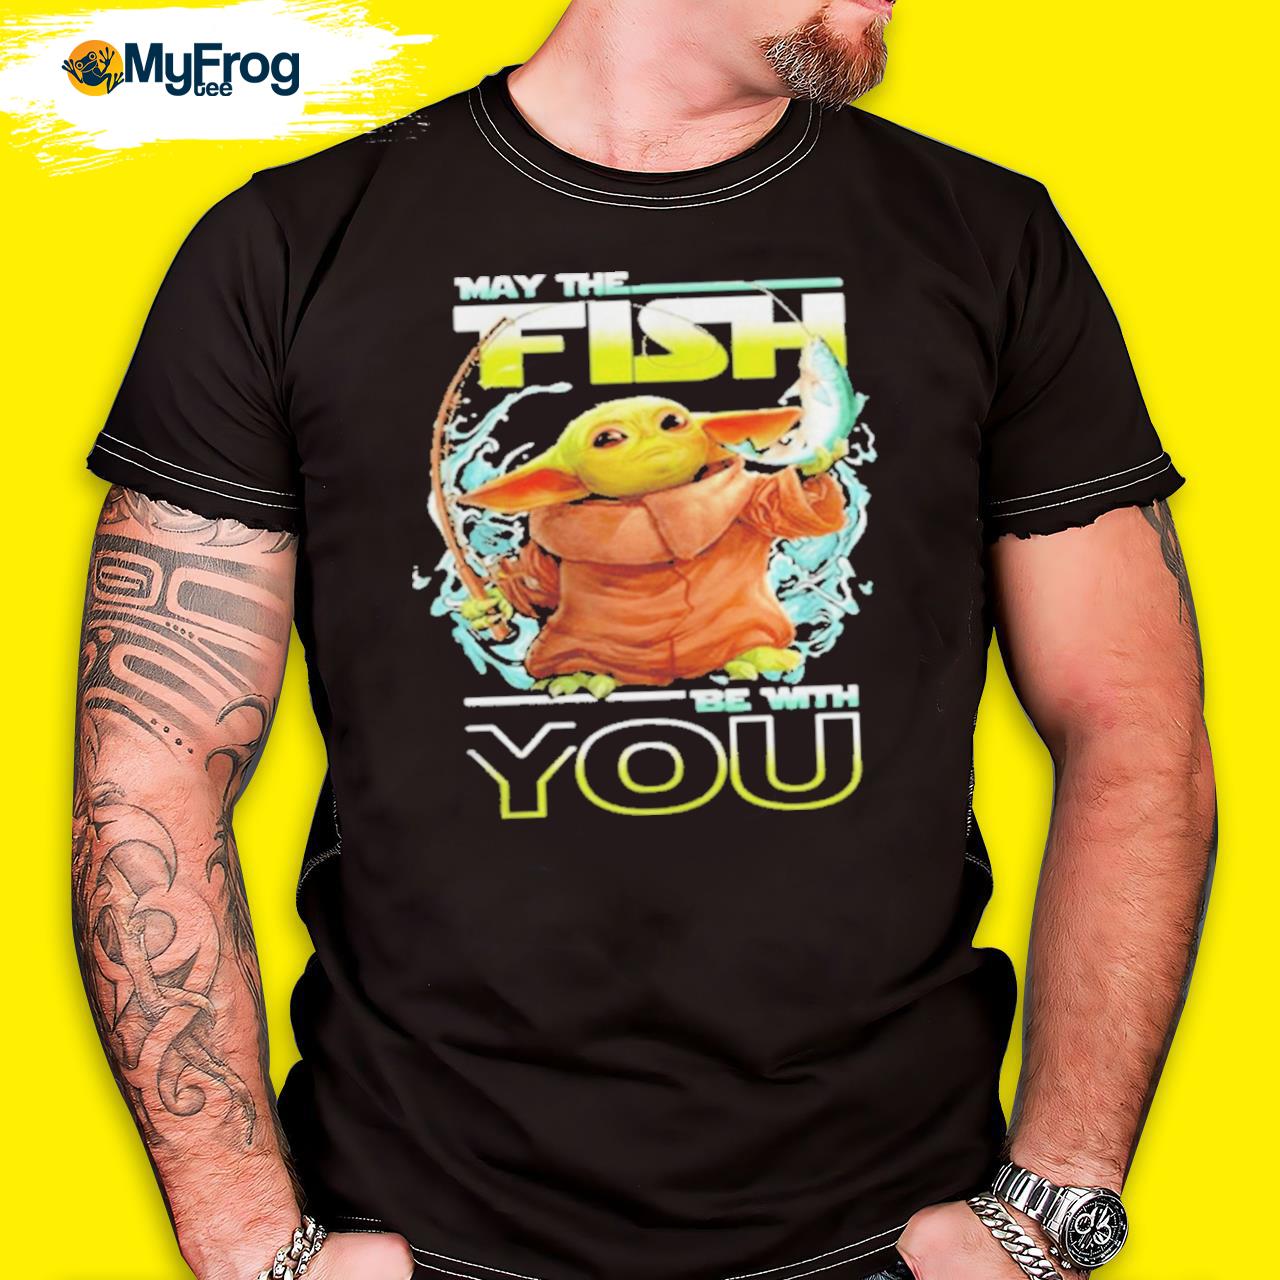 Baby Yoda may the fish be with you shirt